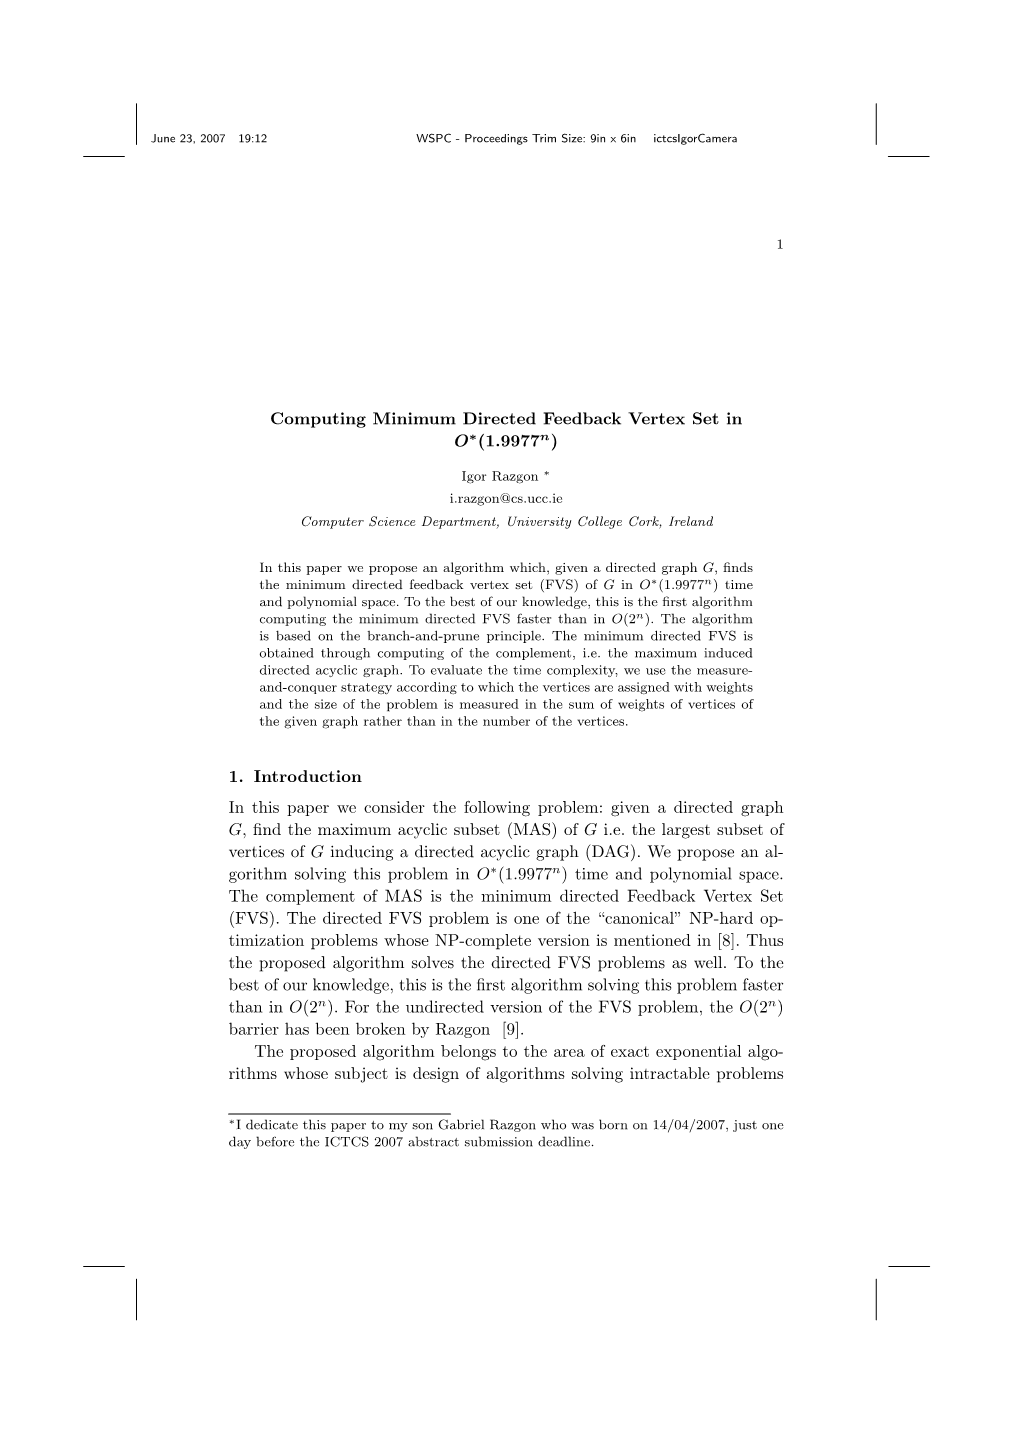 Computing Minimum Directed Feedback Vertex Set in O∗(1.9977N)